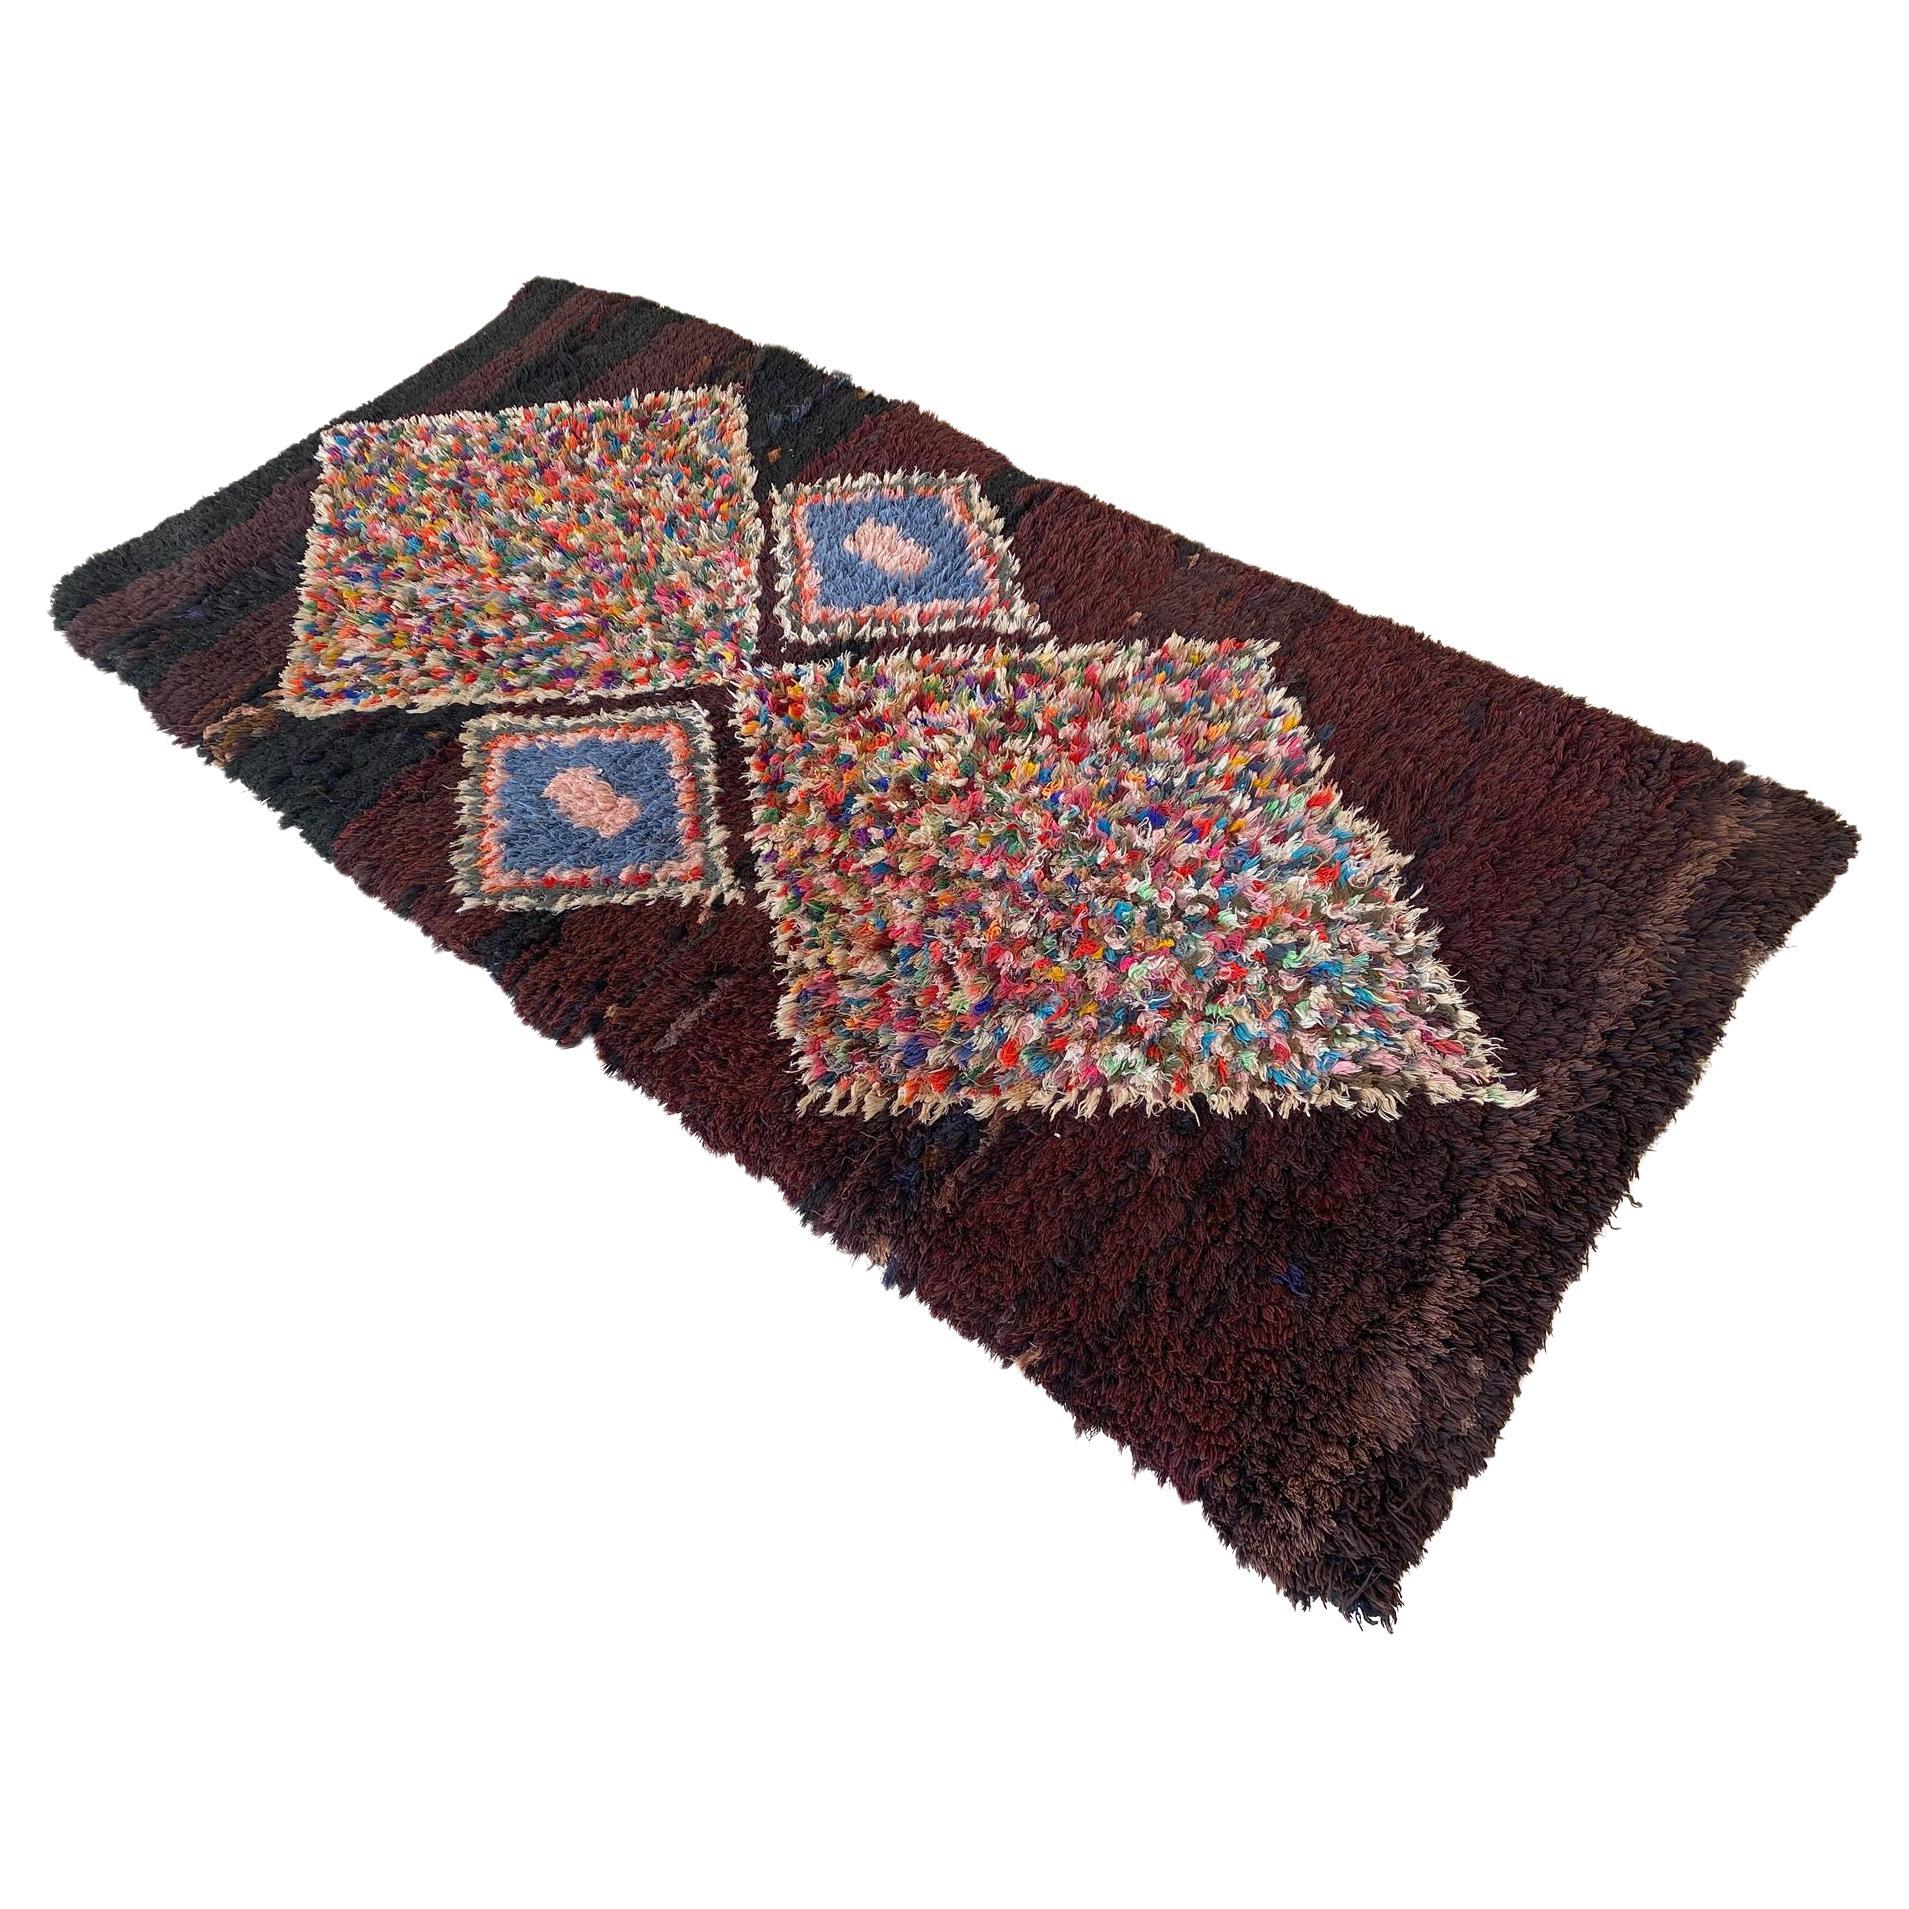 Vintage Moroccan Boucherouite rug - Brown/multicolor - 3.1x5.9feet / 96x180cm For Sale